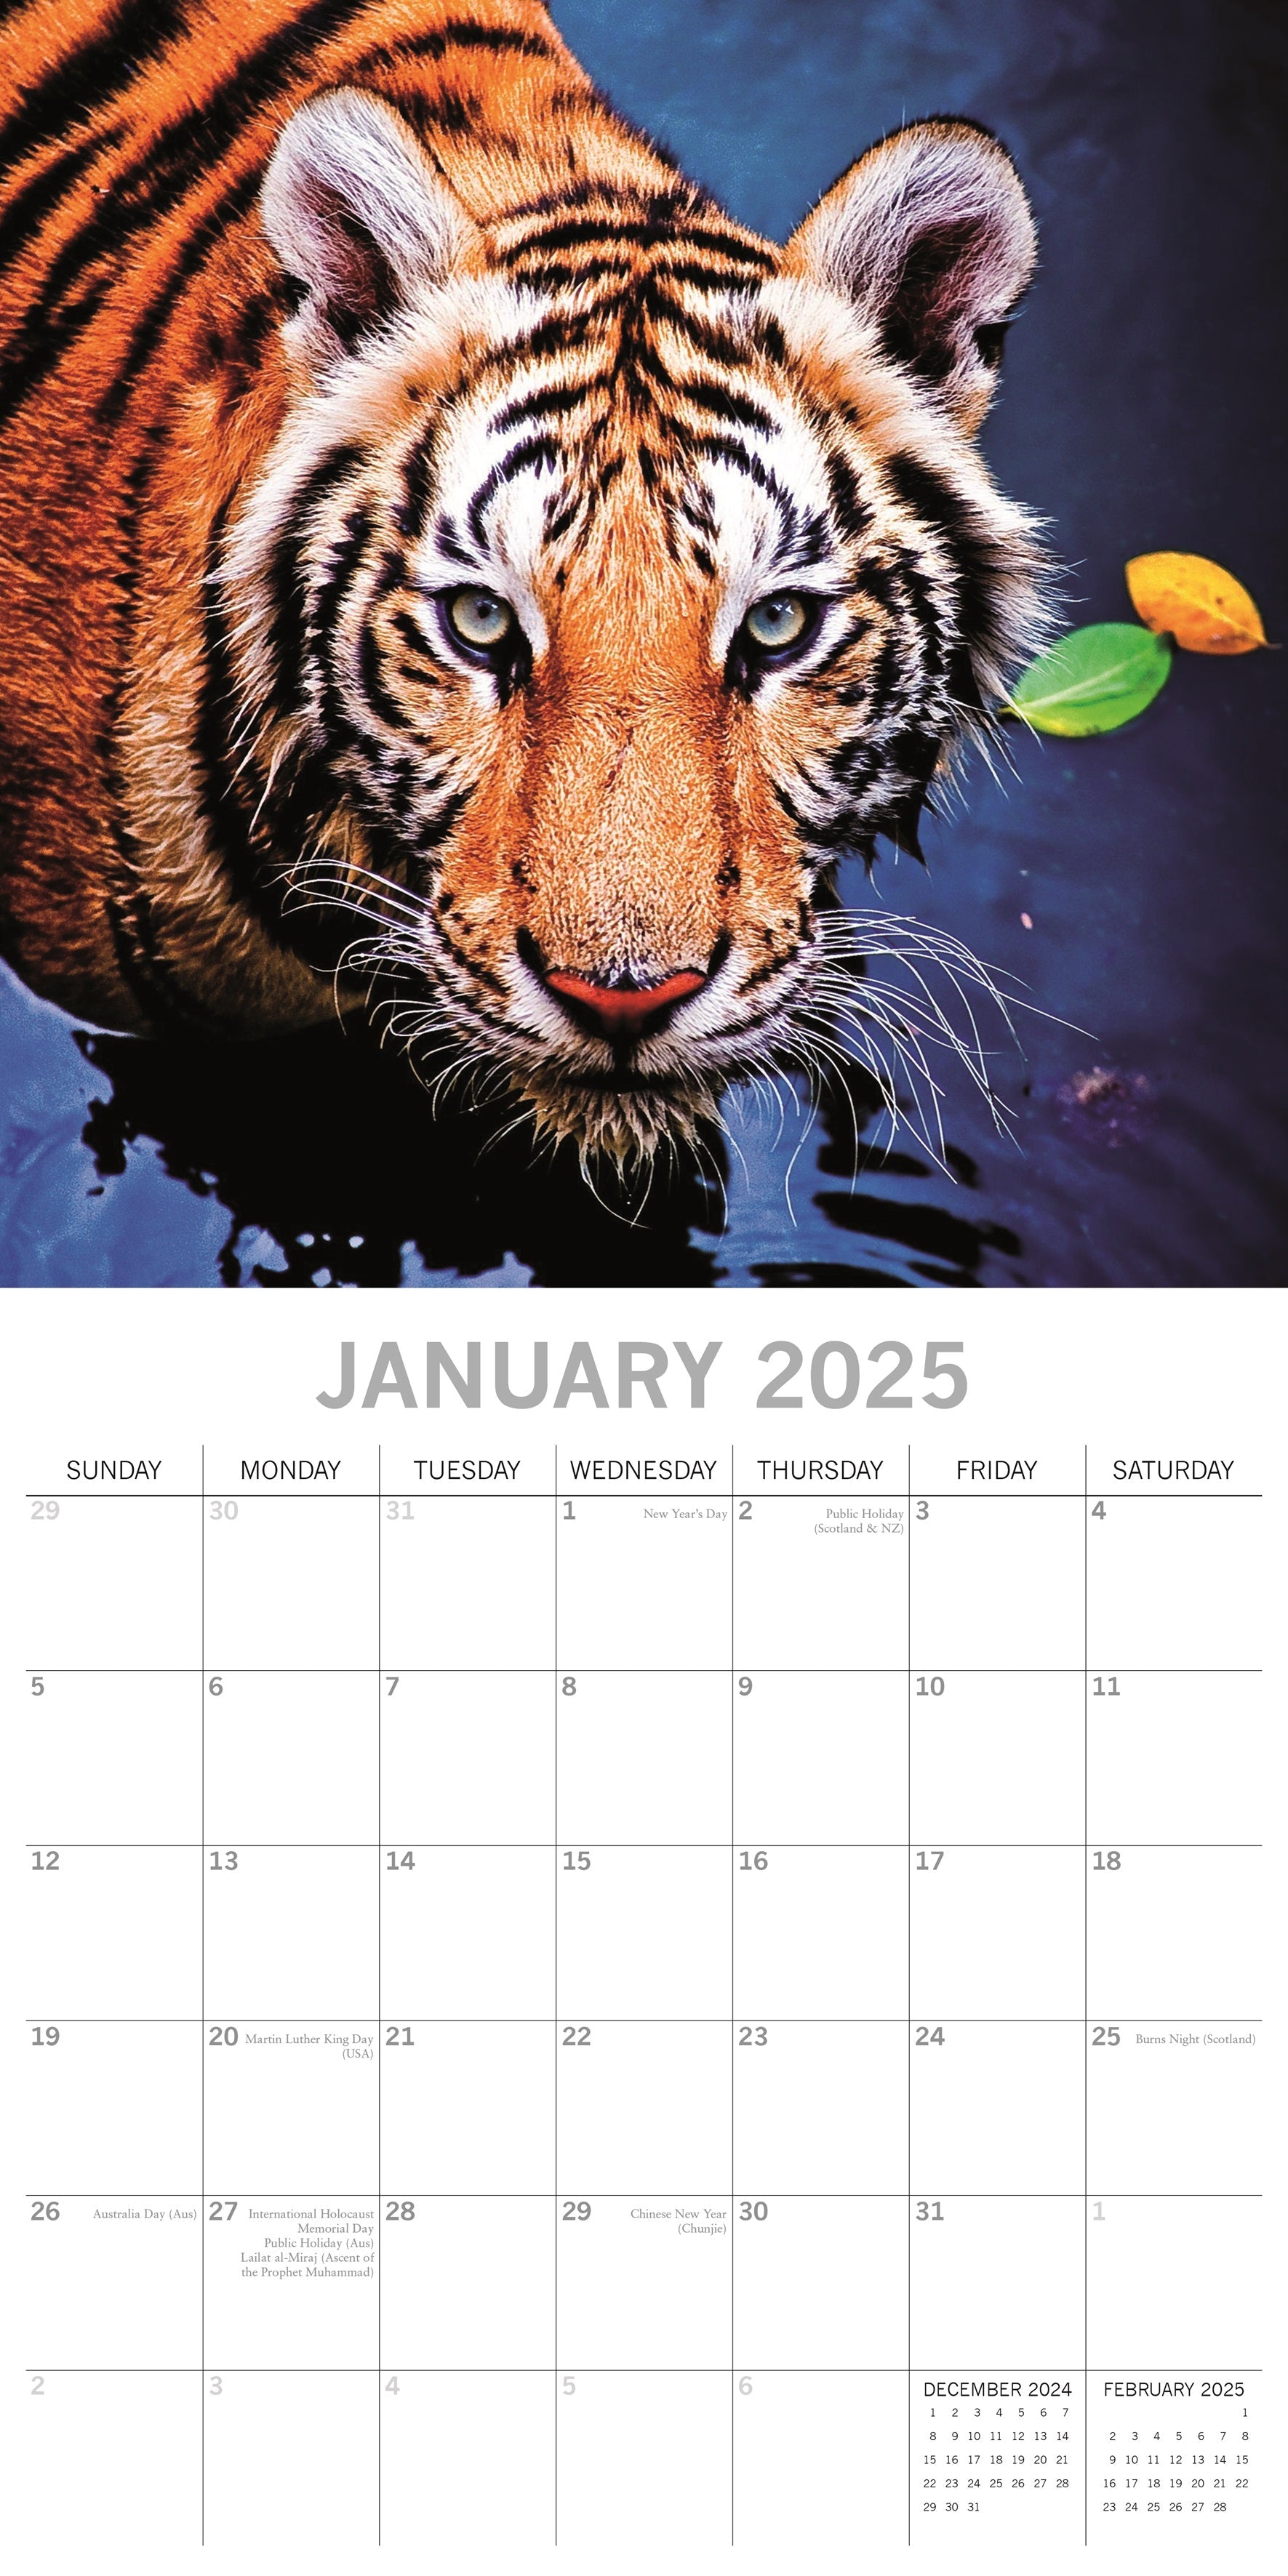 2025 Tigers - Square Wall Calendar